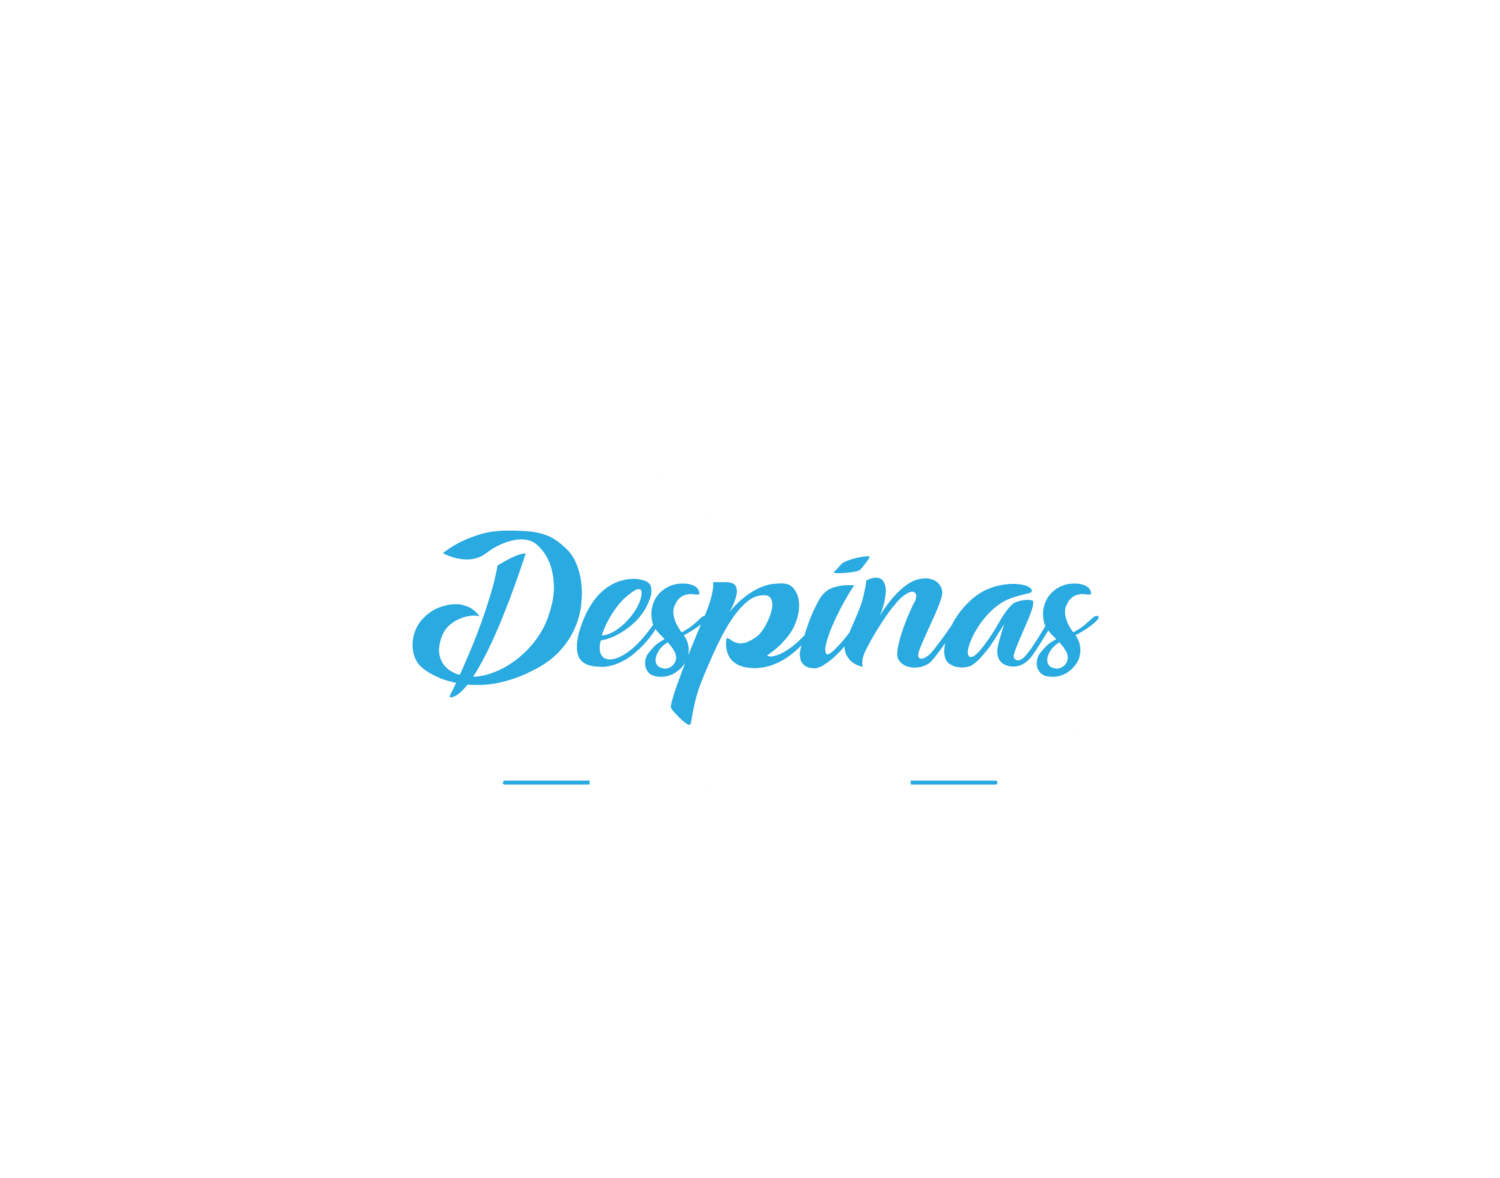 Despinas Mediterranean Taste